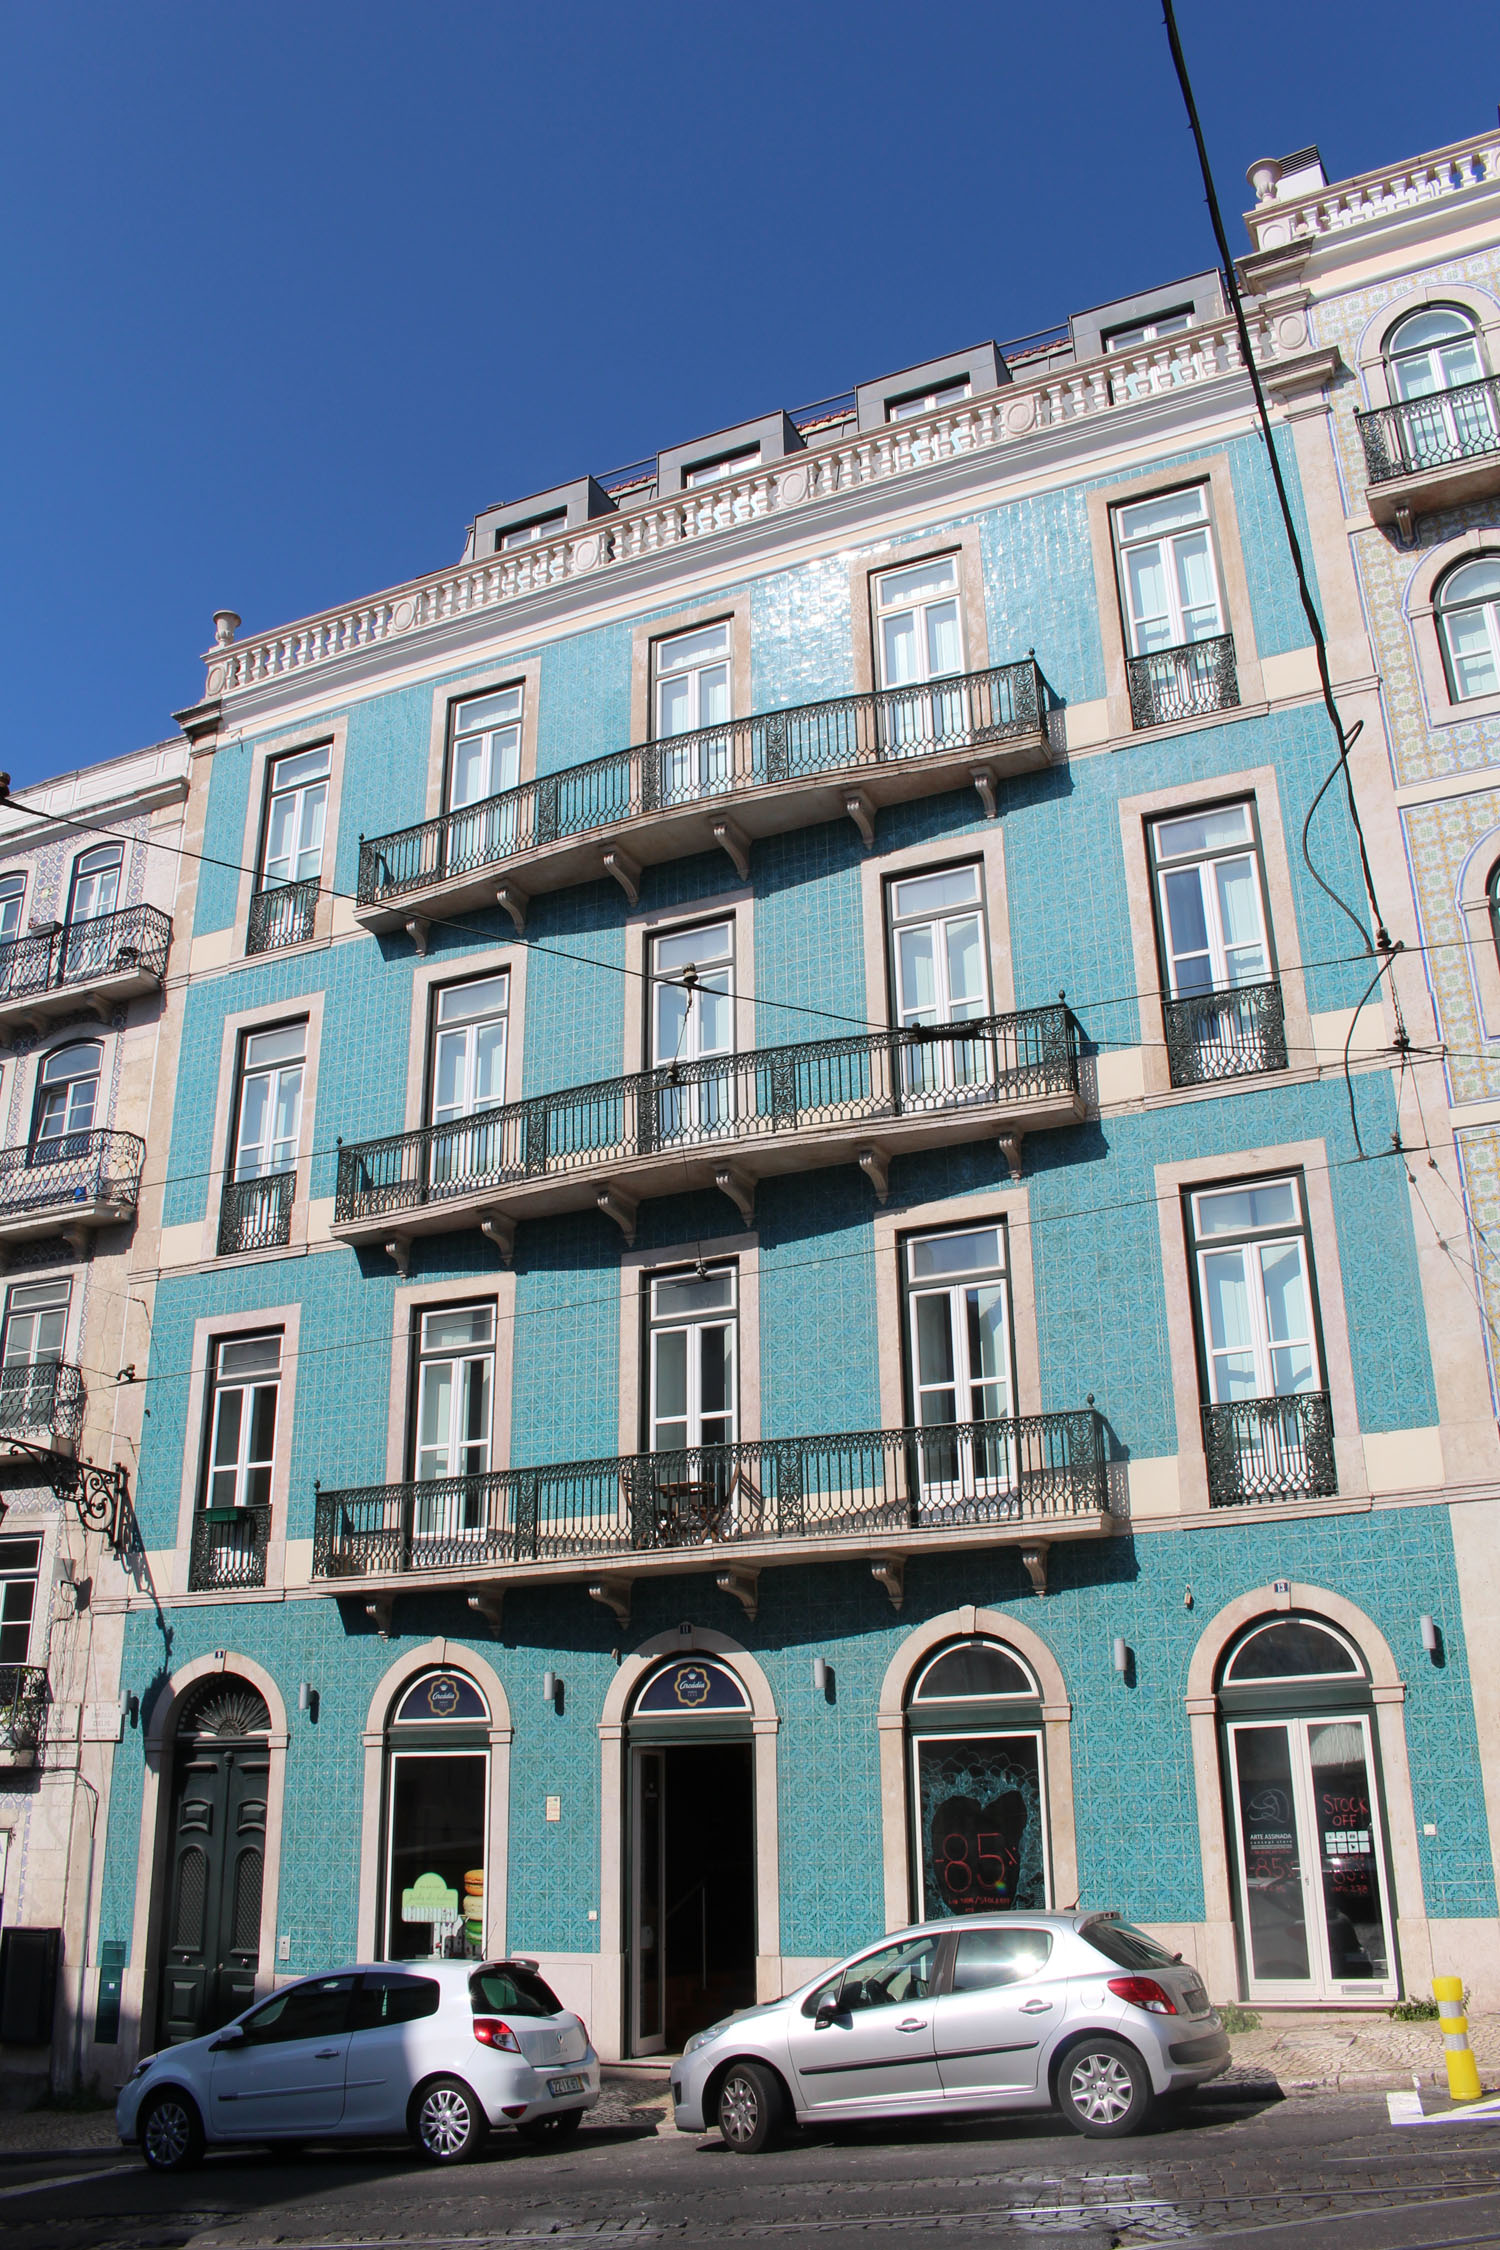 Lisbonne, rua Nova da Trindade, bâtiment bleu